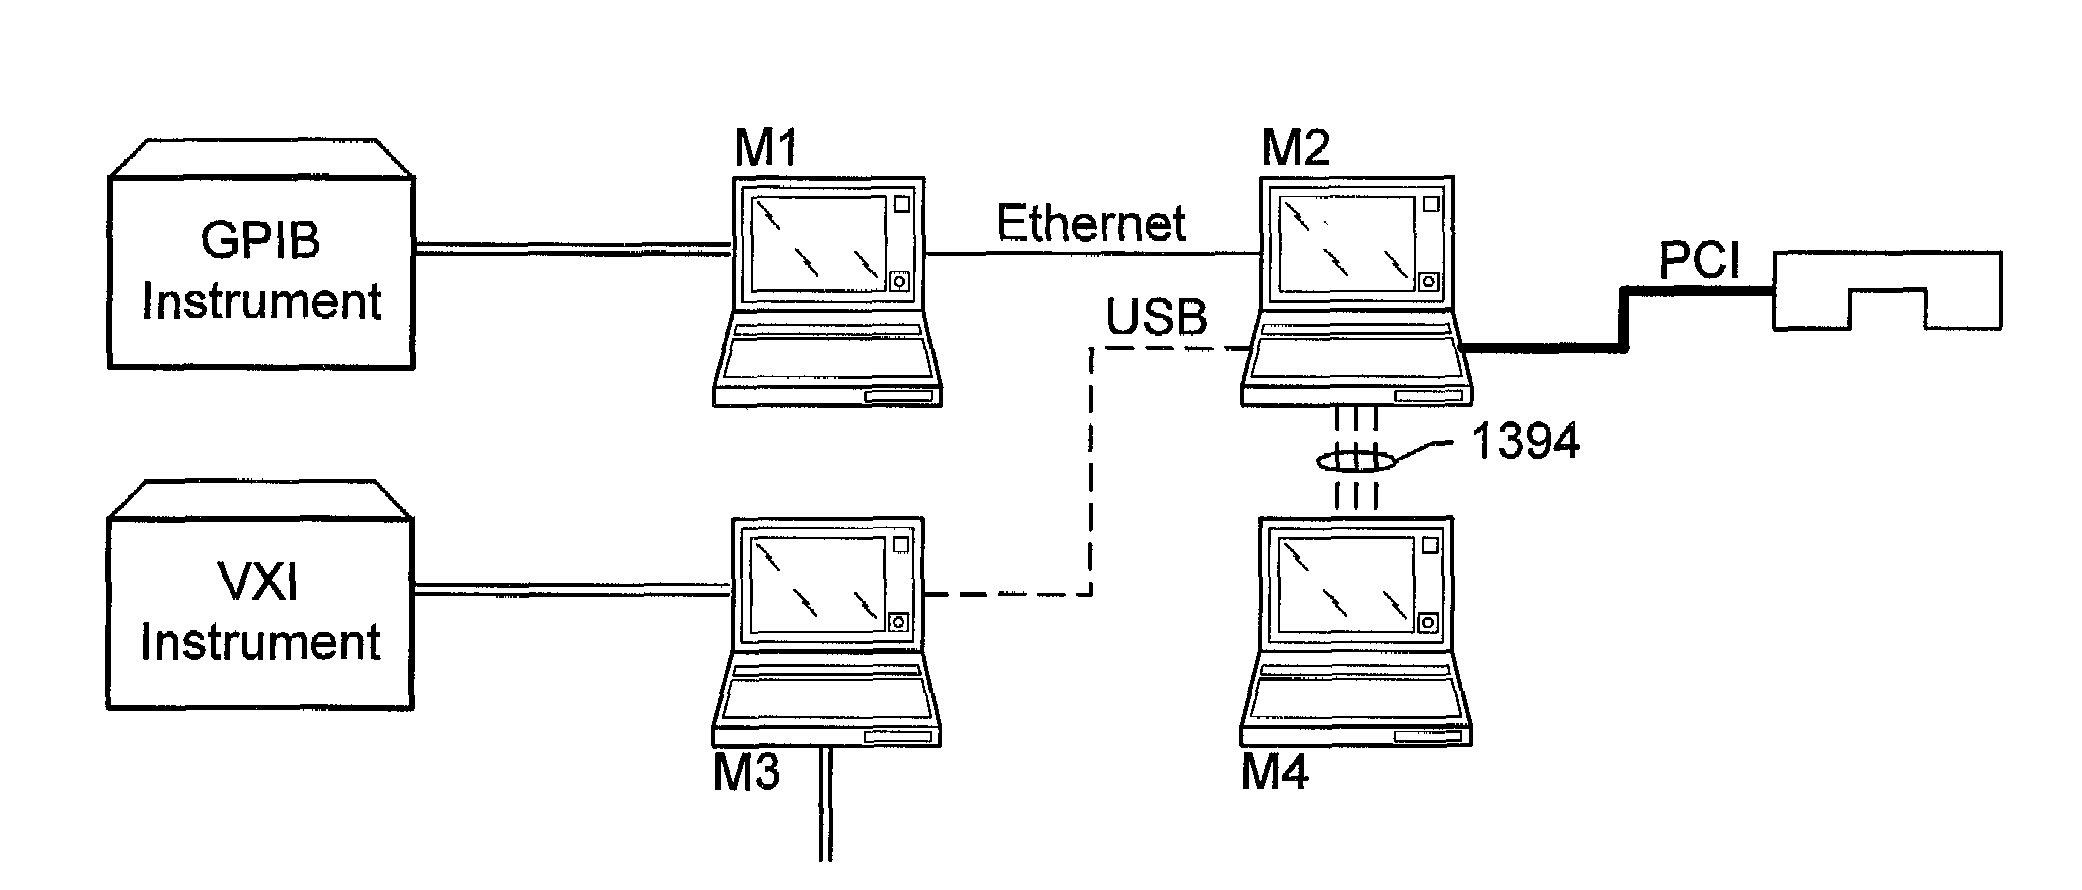 Configuration diagram with context sensitive connectivity